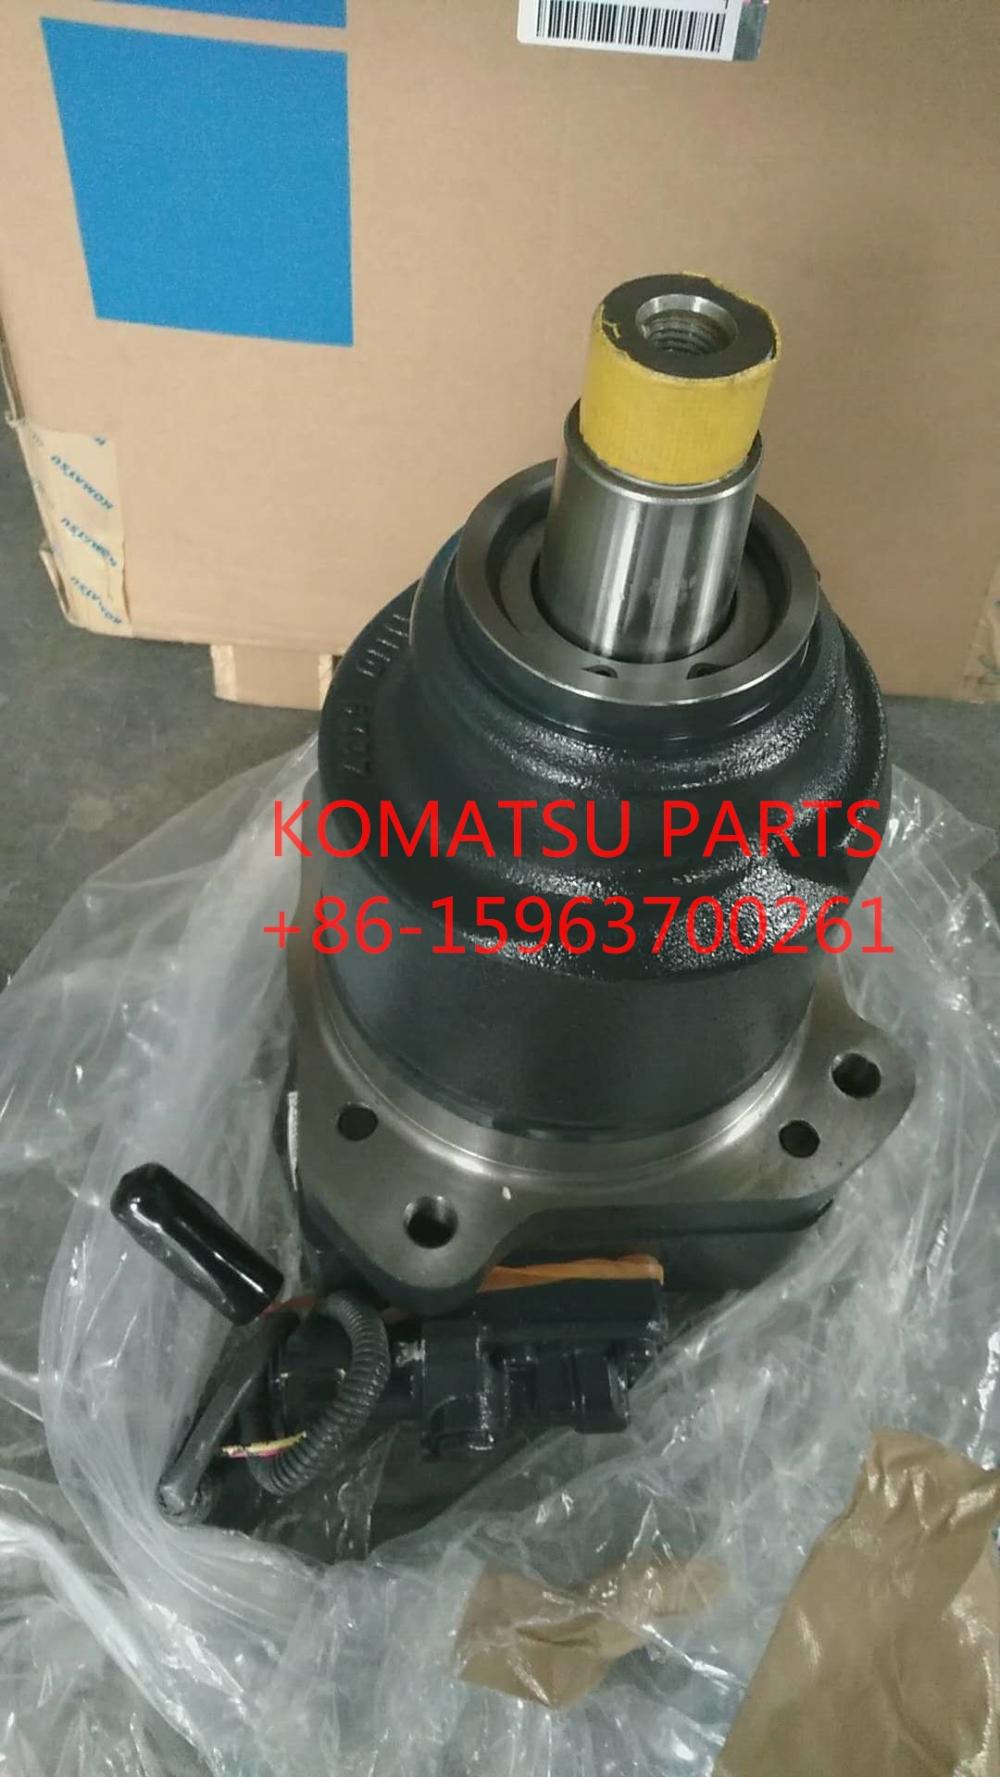 KOMATSU PC600-8E0 EXCAVATOR Motor Motor 708-7W-00120